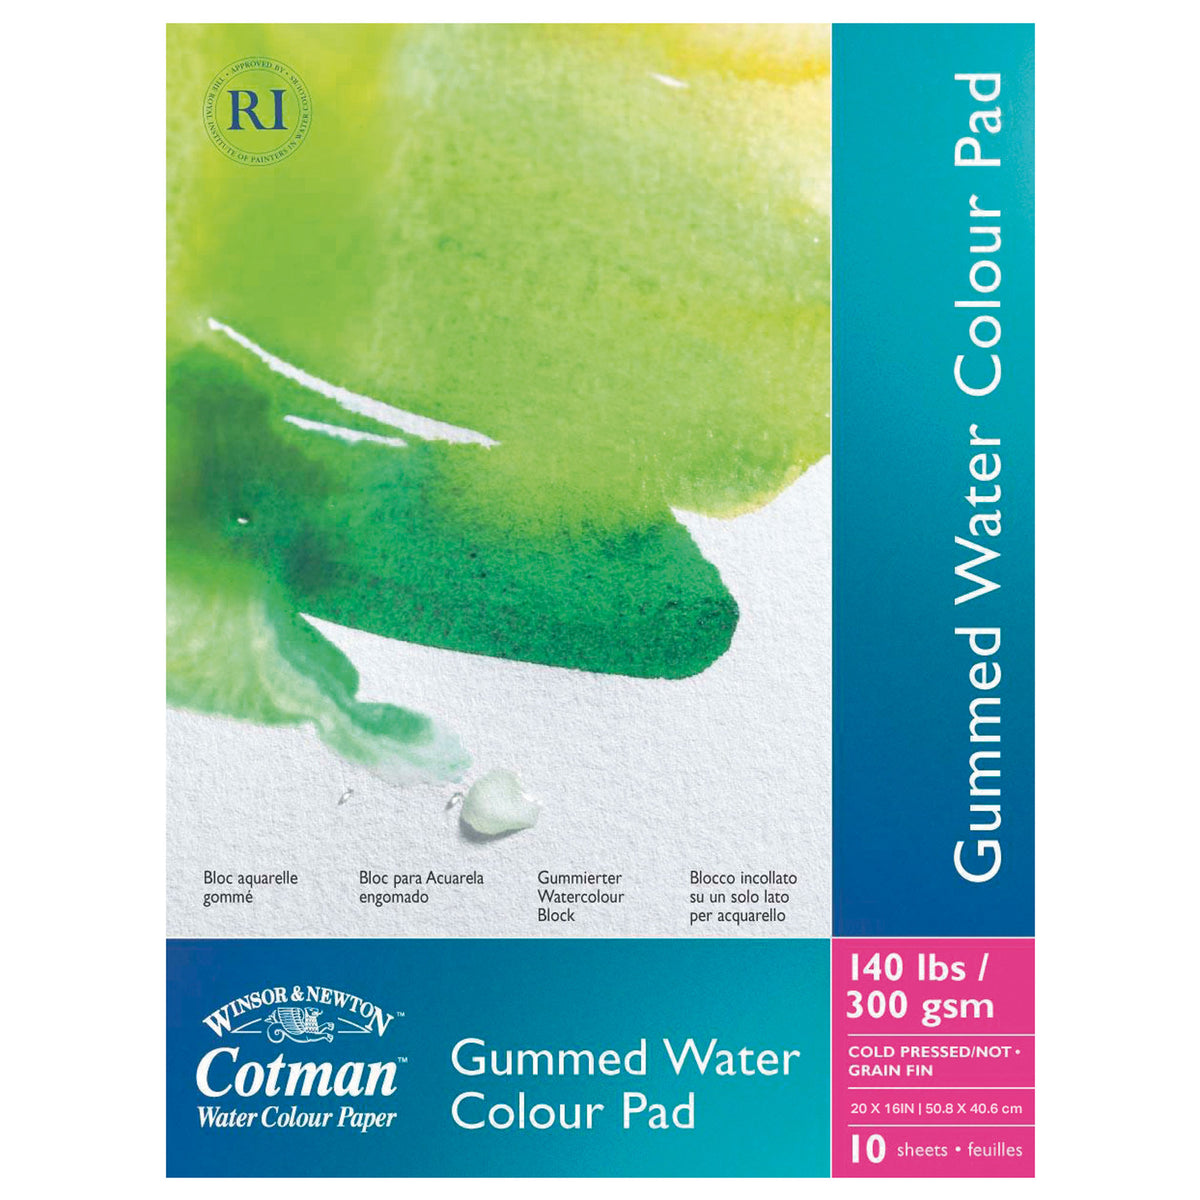 Winsor &amp; Newton Cotman Gummed Water Colour Pad - Cold Pressed - 300gsm/140Ibs - 20&quot; x 16&quot; - 10 Sheets